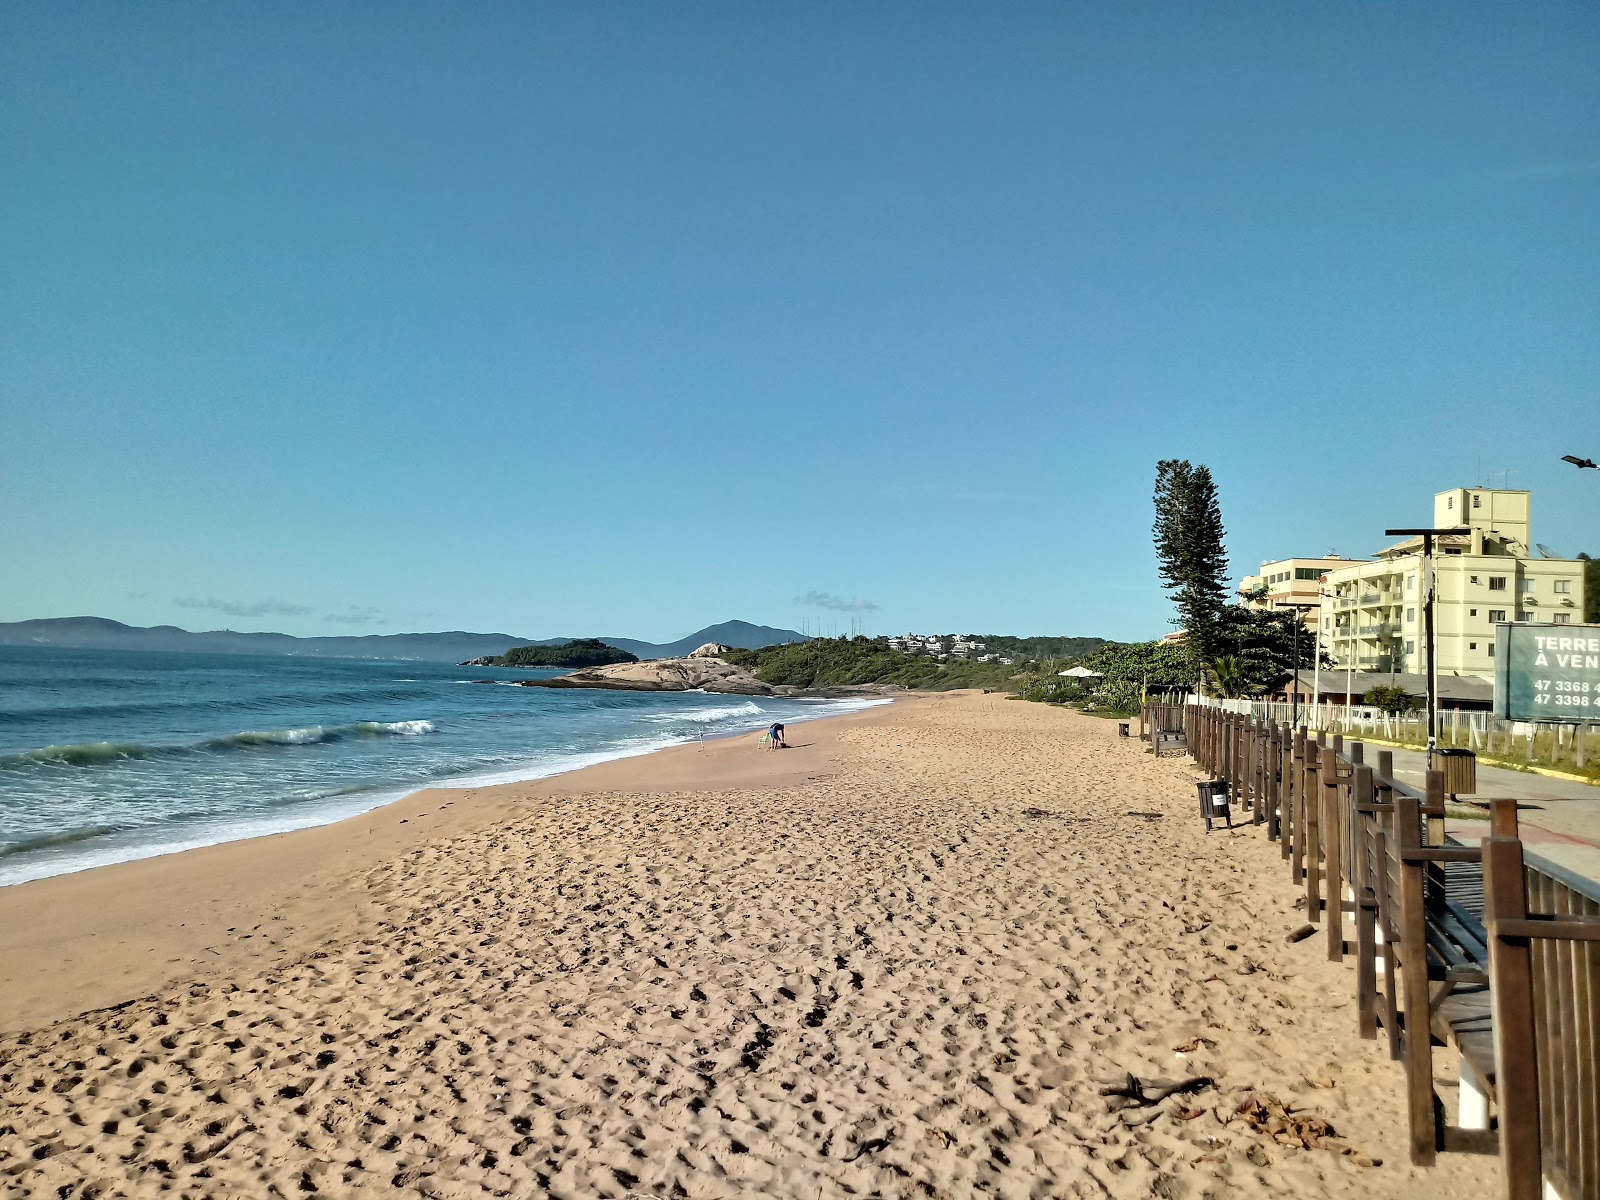 Foto av Praia da Ilhota med rymlig strand